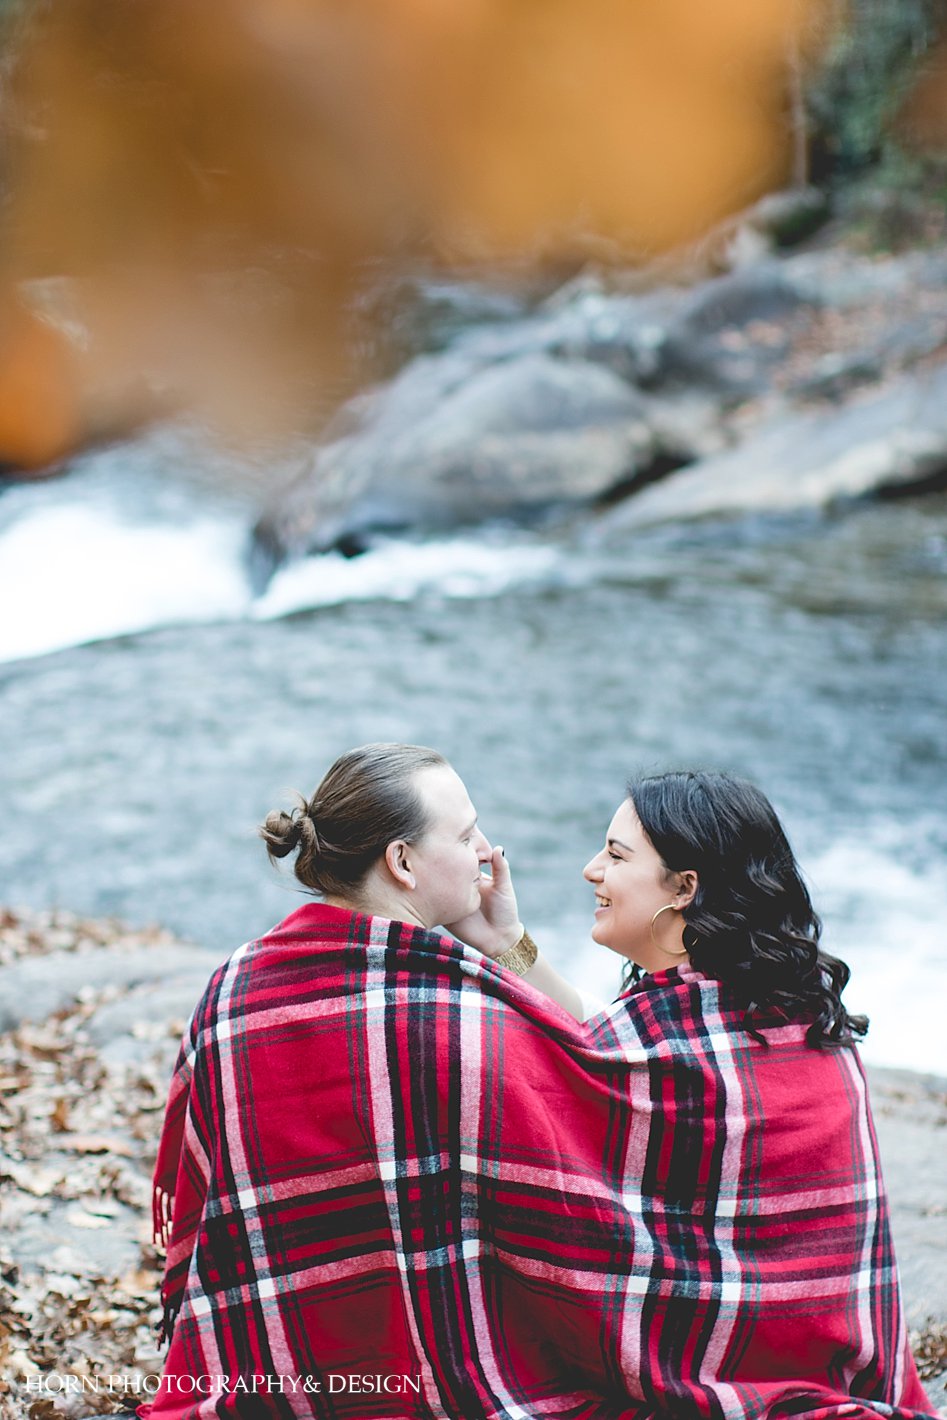 Horn Photography and Design Waterfall Engagement Shoot Atlanta Wedding photographer Adventurous couples